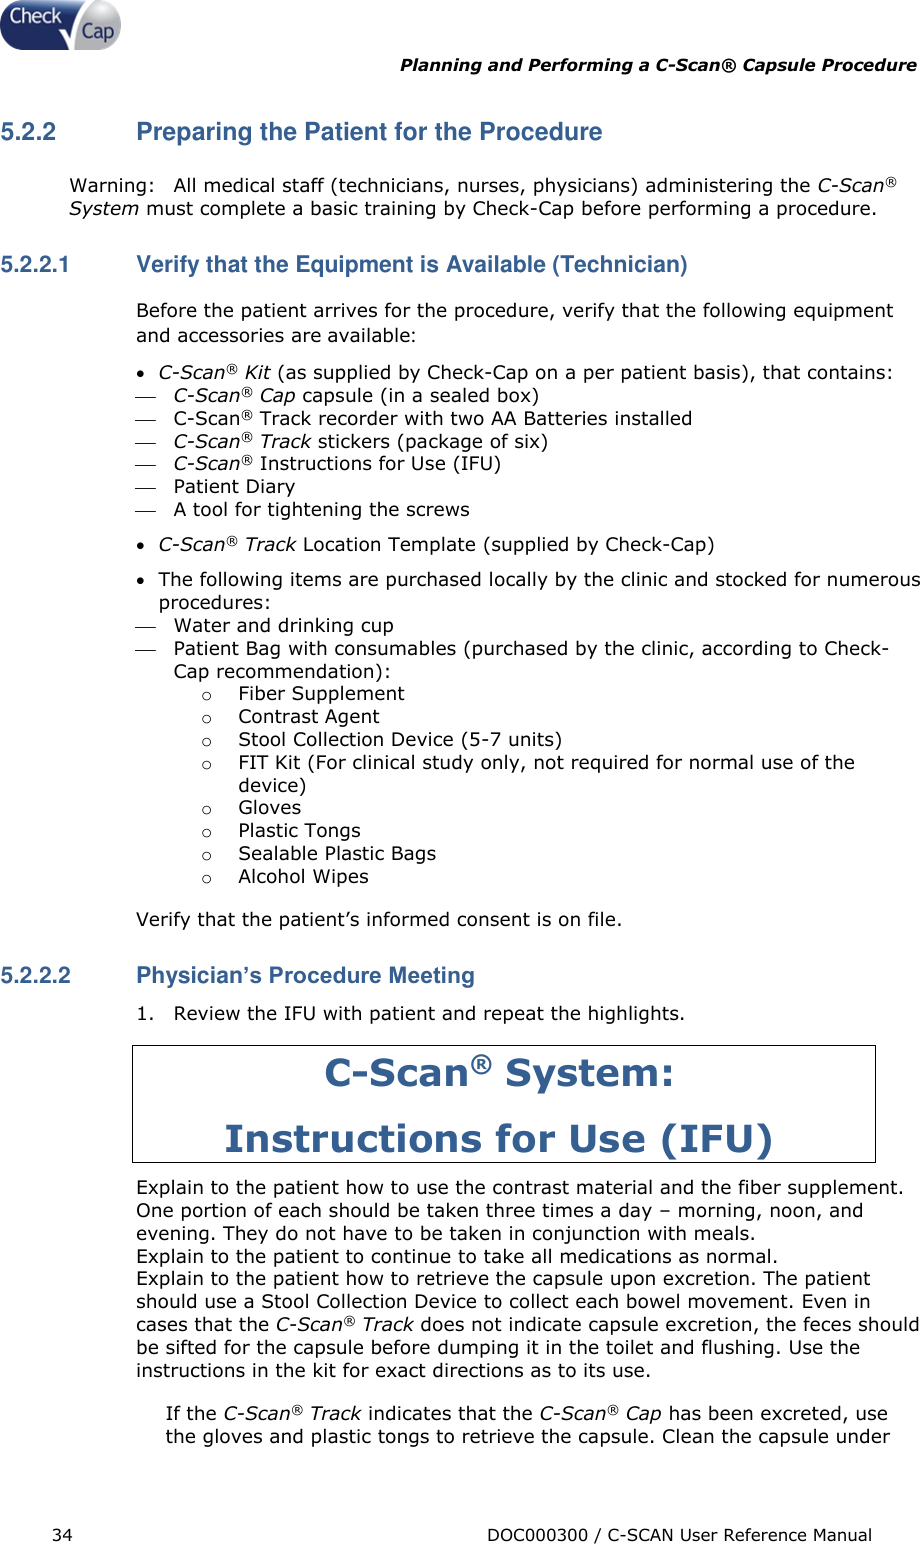 Page 34 of Check Cap CAP10007506 C-Scan Cap transceiver User Manual Title